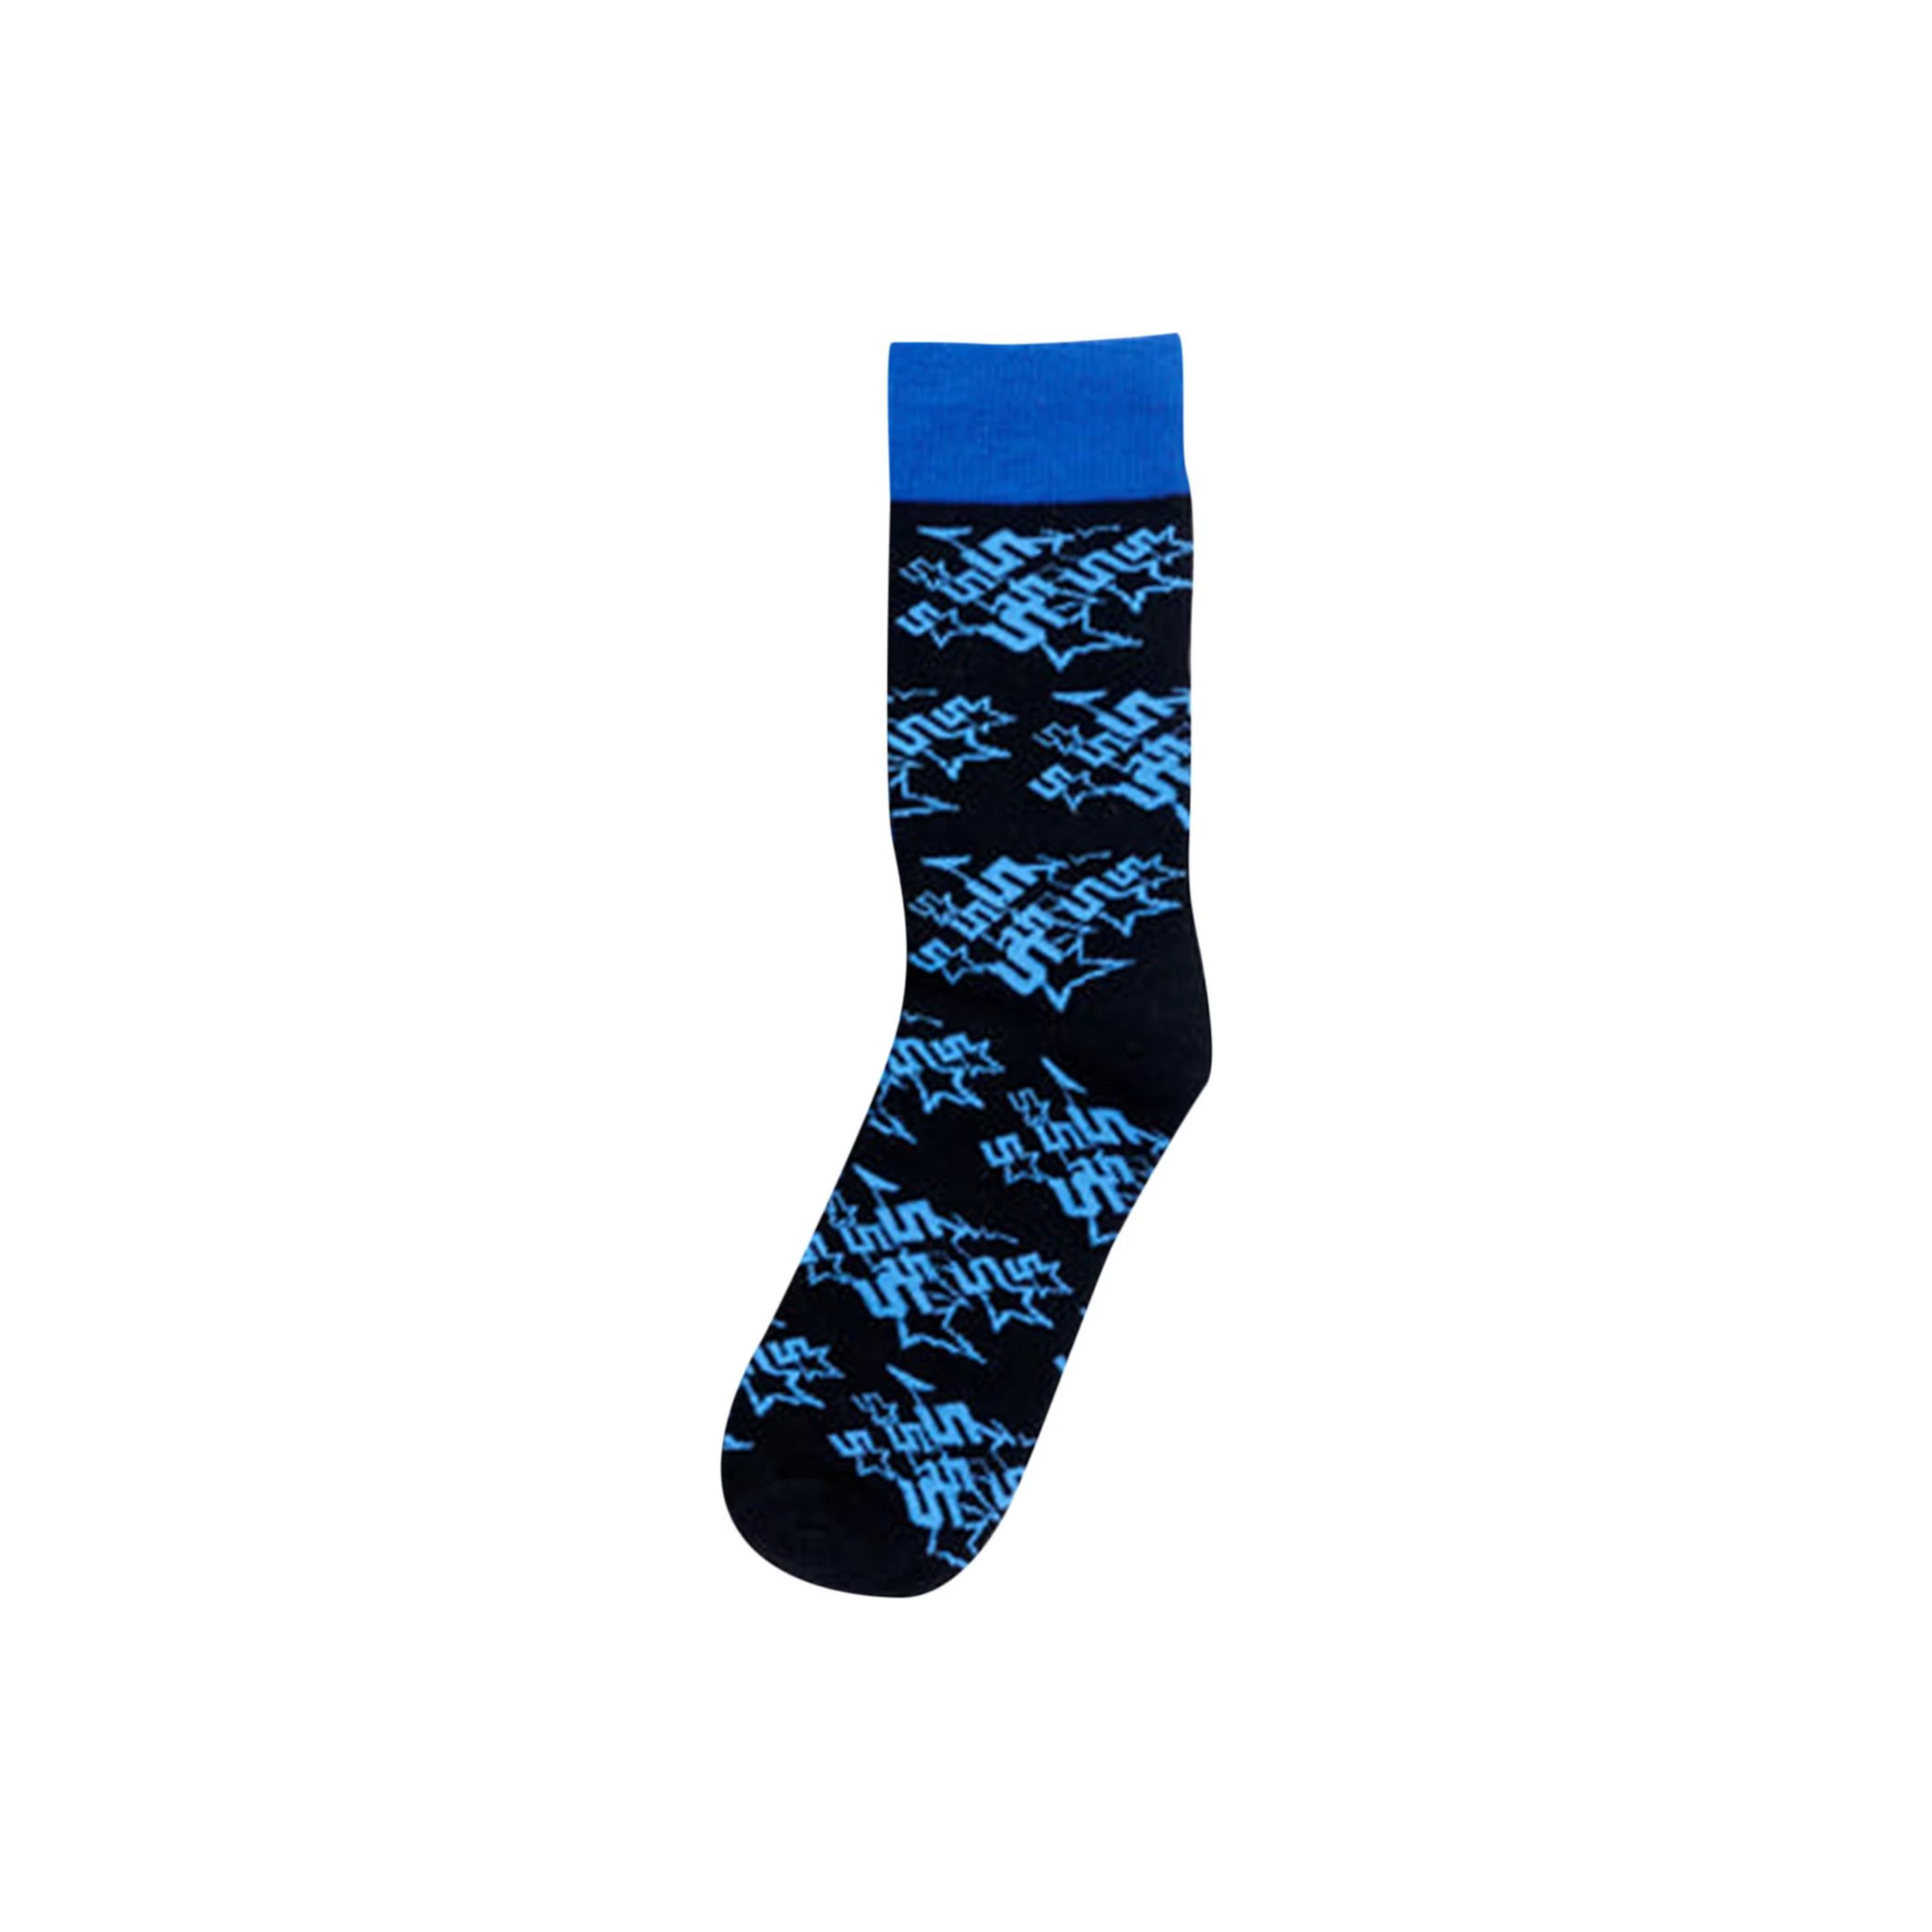 Sp5der Candy Sock 'Black/Blue' CRUIZER